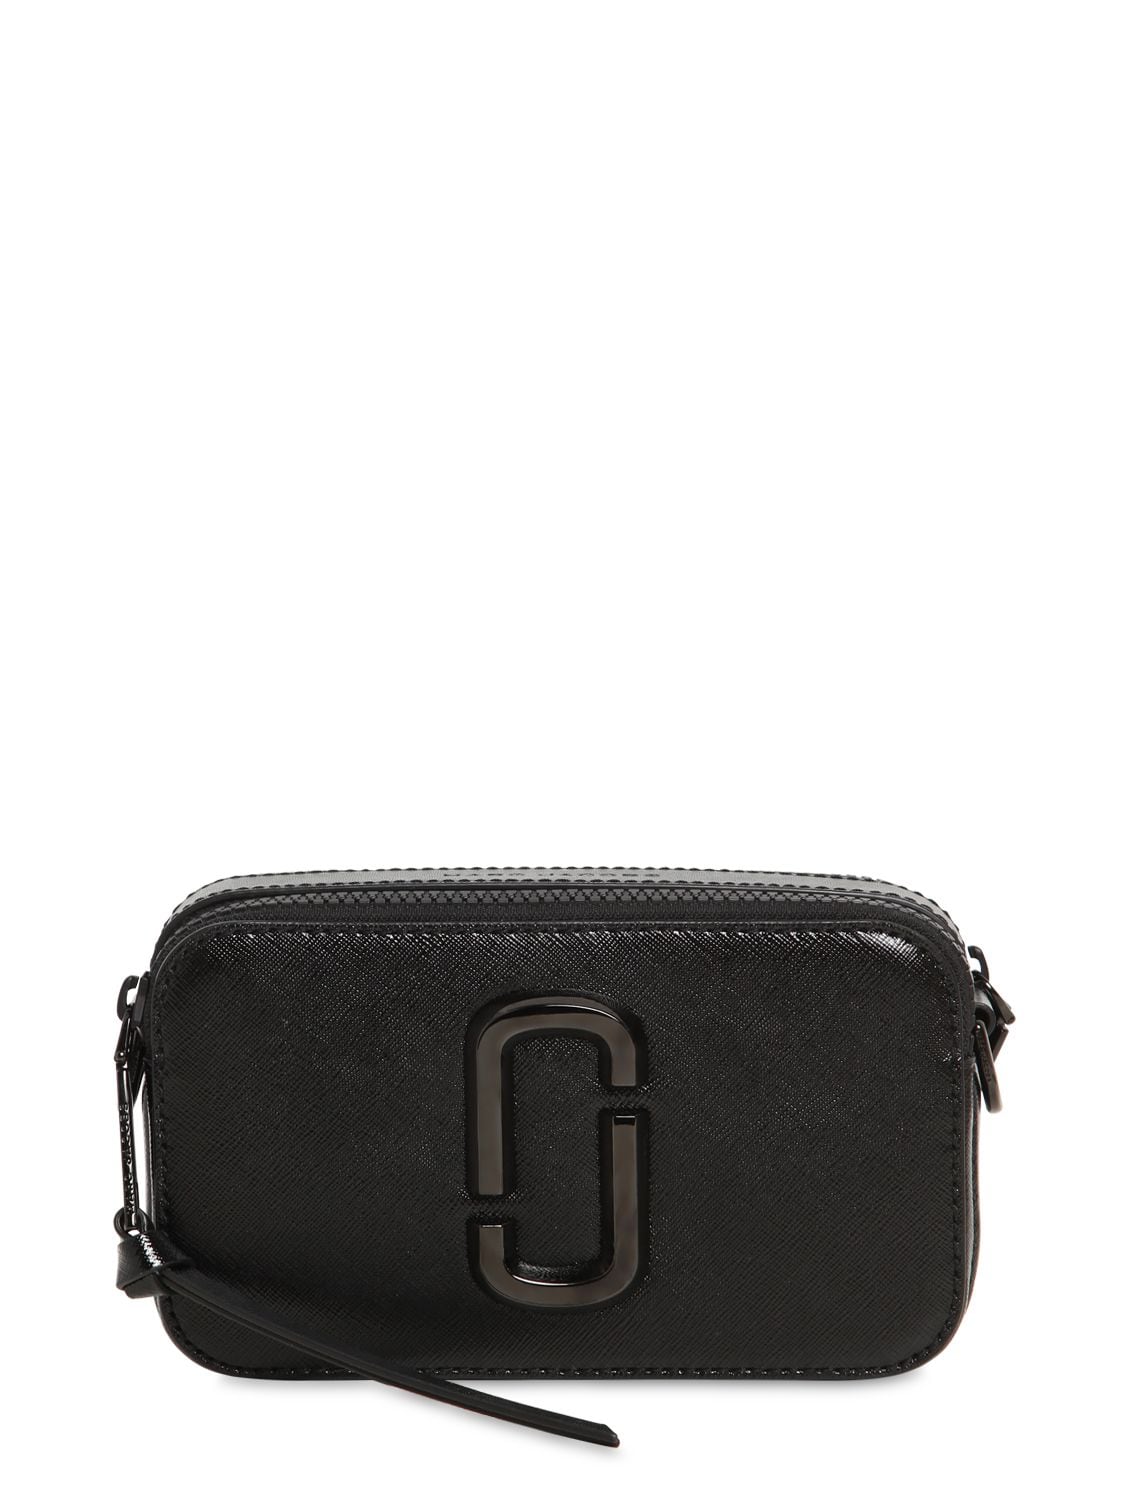 Marc Jacobs The Snapshot DTM  Saffiano leather, Grey shoulder bag